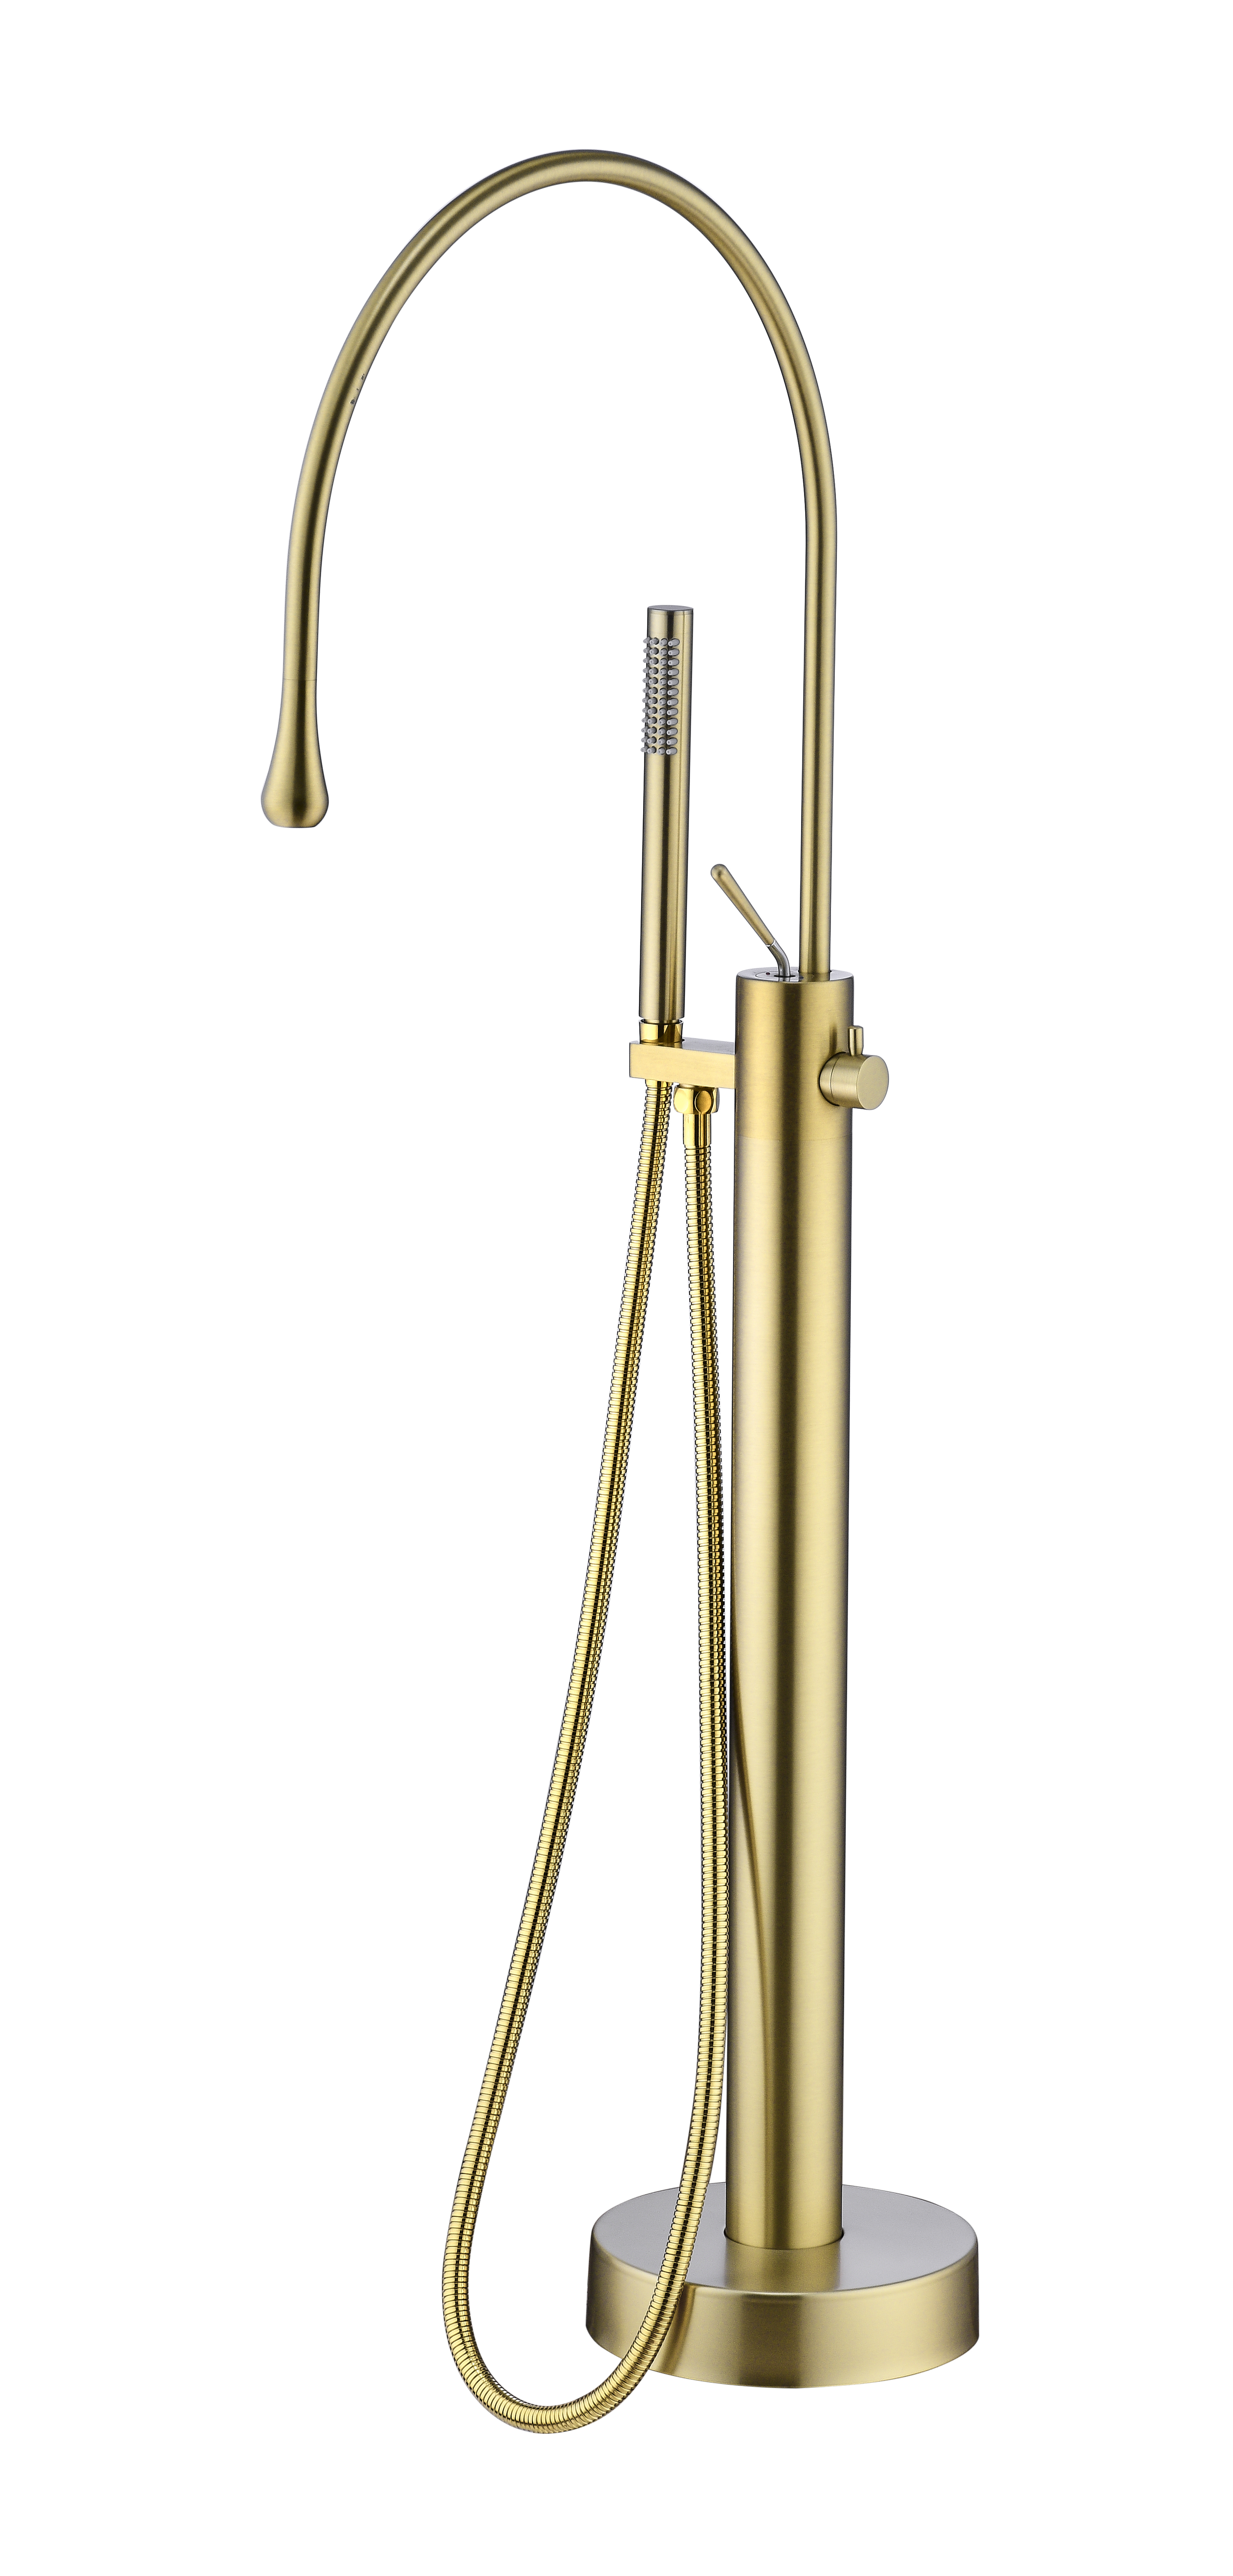 Floor Mounted Luxury Brass Bath Mixer Tap Double Lever Freestanding Bathtub Faucet Free Standing bathtub faucet mixer